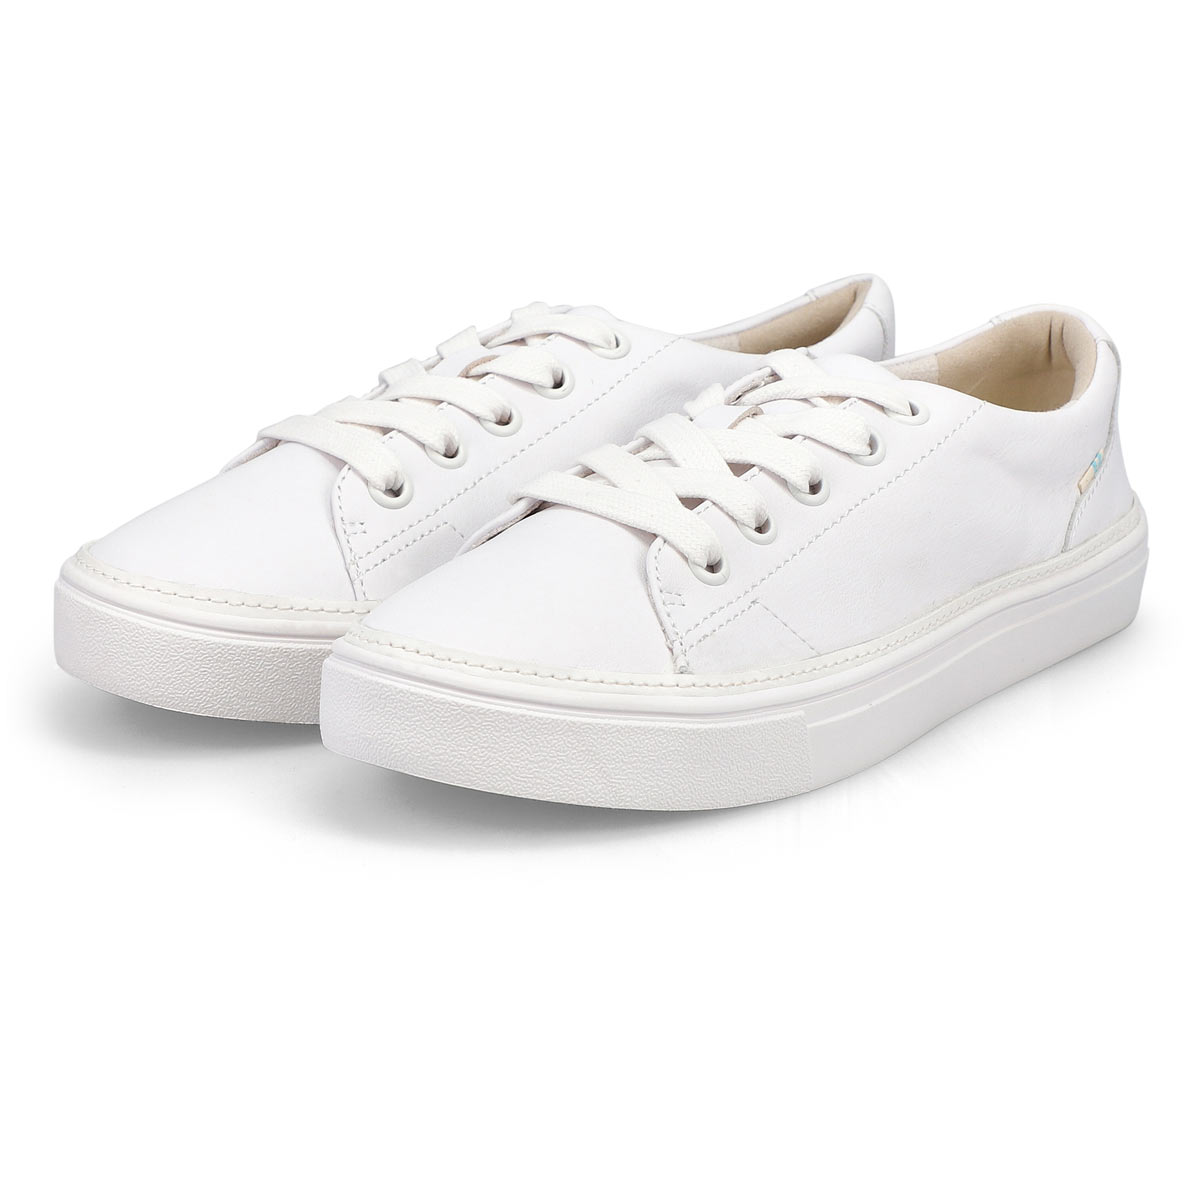 TOMS Women's Alex Sneaker - White Leather | SoftMoc.com